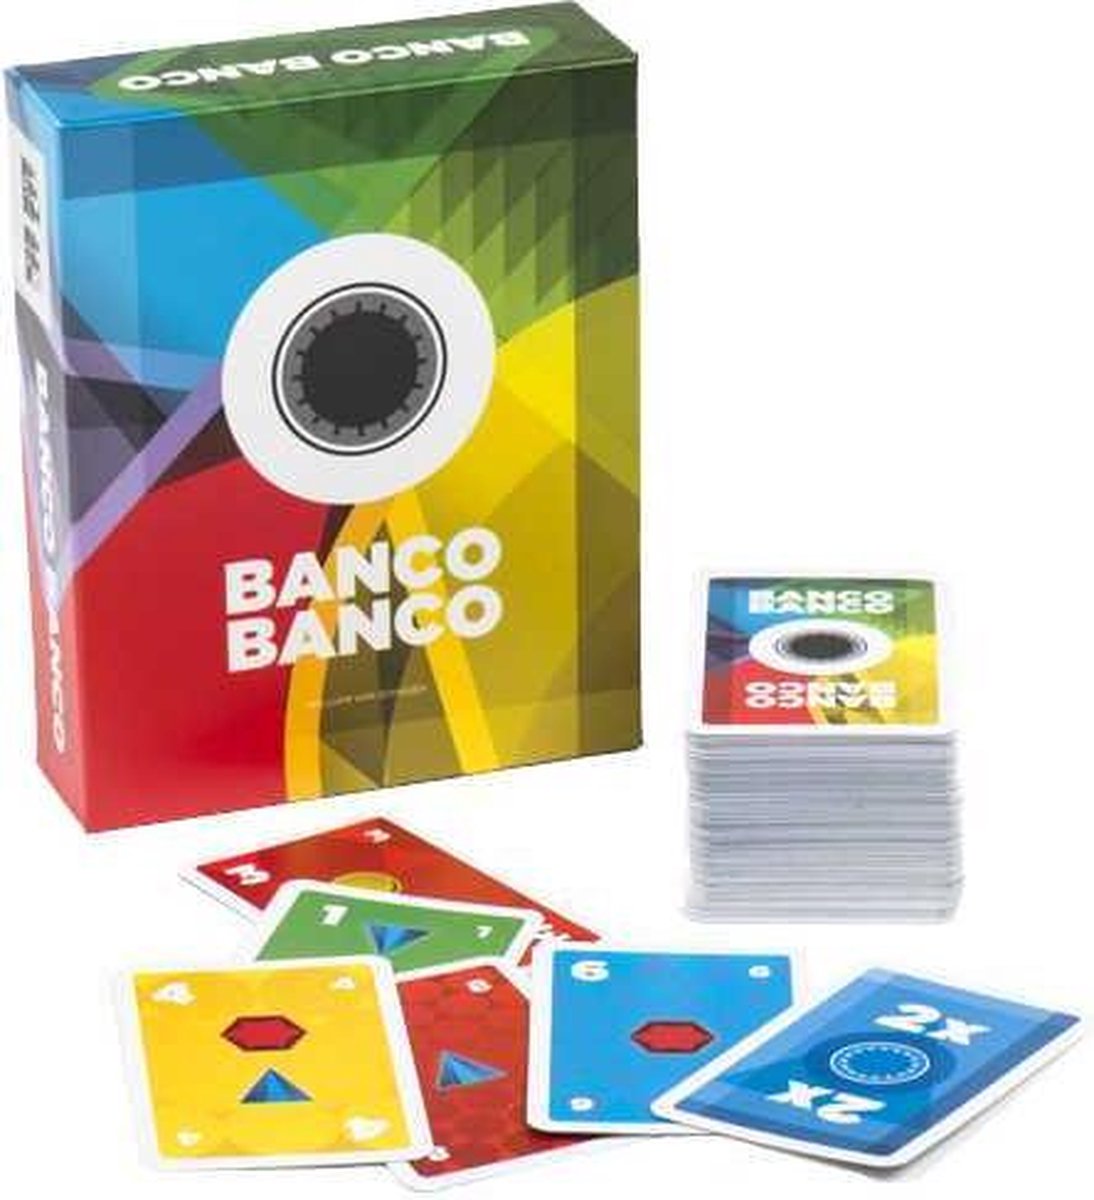 Banco Banco kaartspel